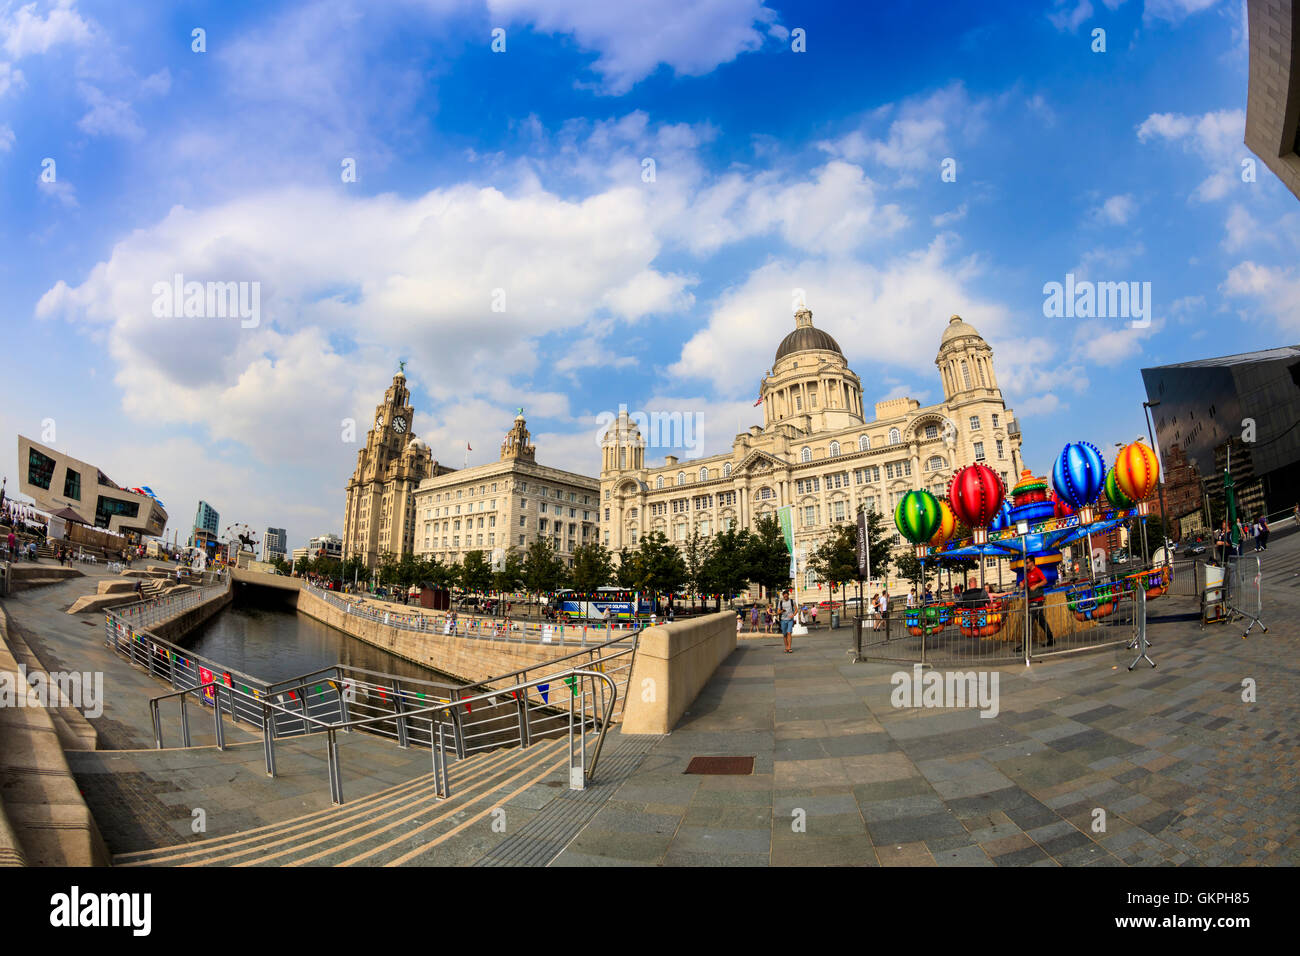 Berühmte Architektur an der Waterfront in Liverpool, England. Fish eye Perspektive. Stockfoto